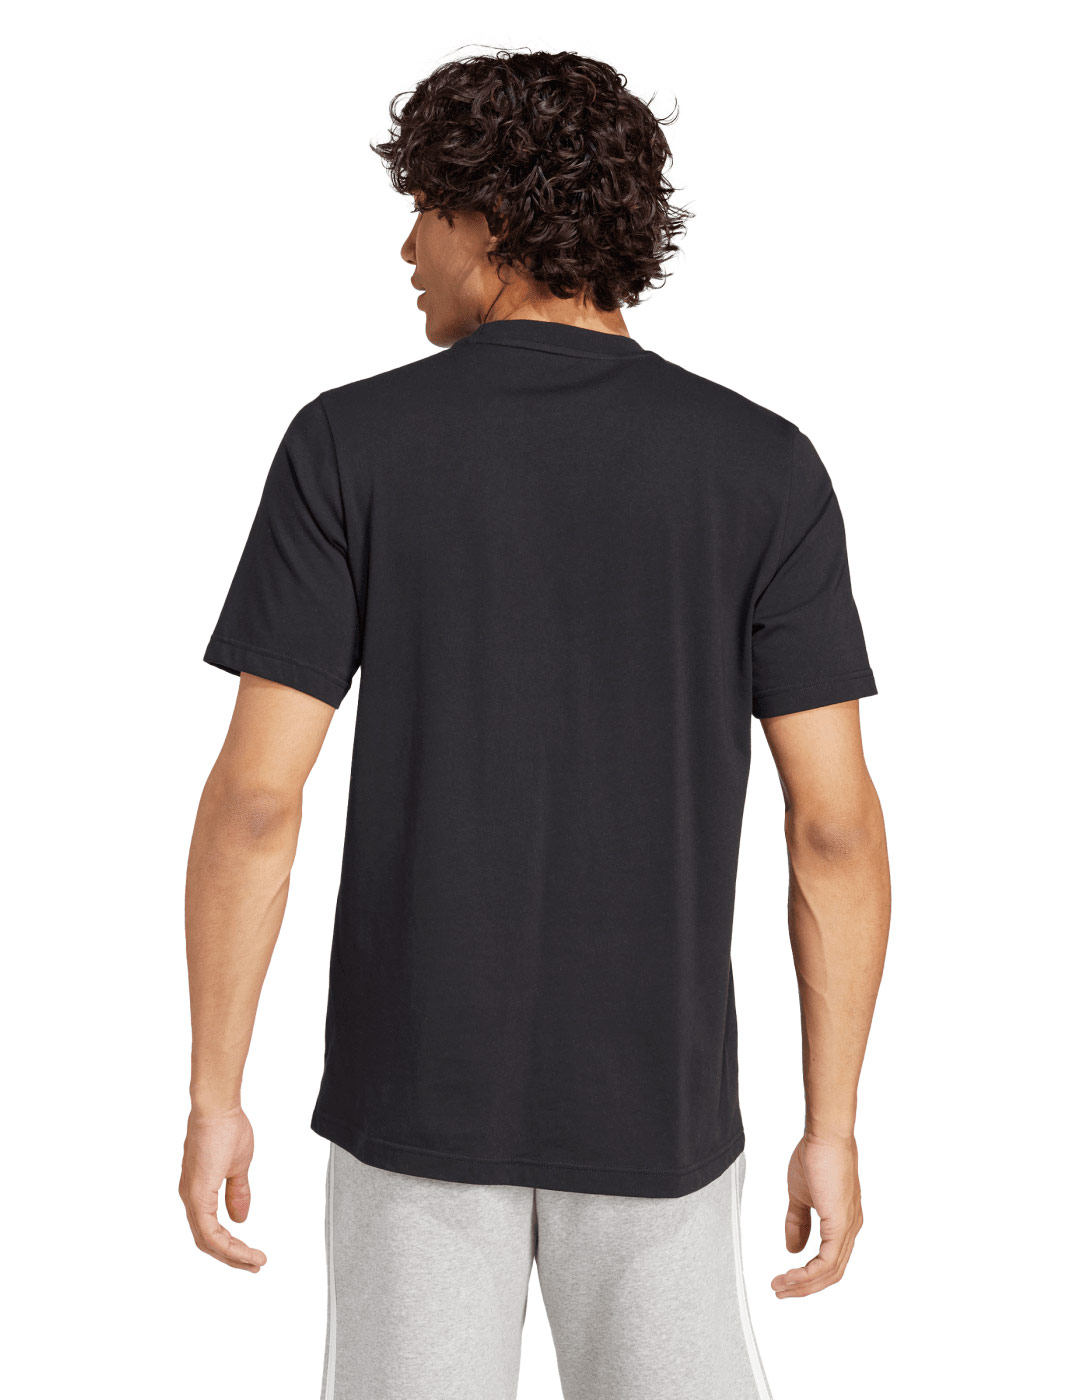 camiseta manga corta adidas hombre, negra